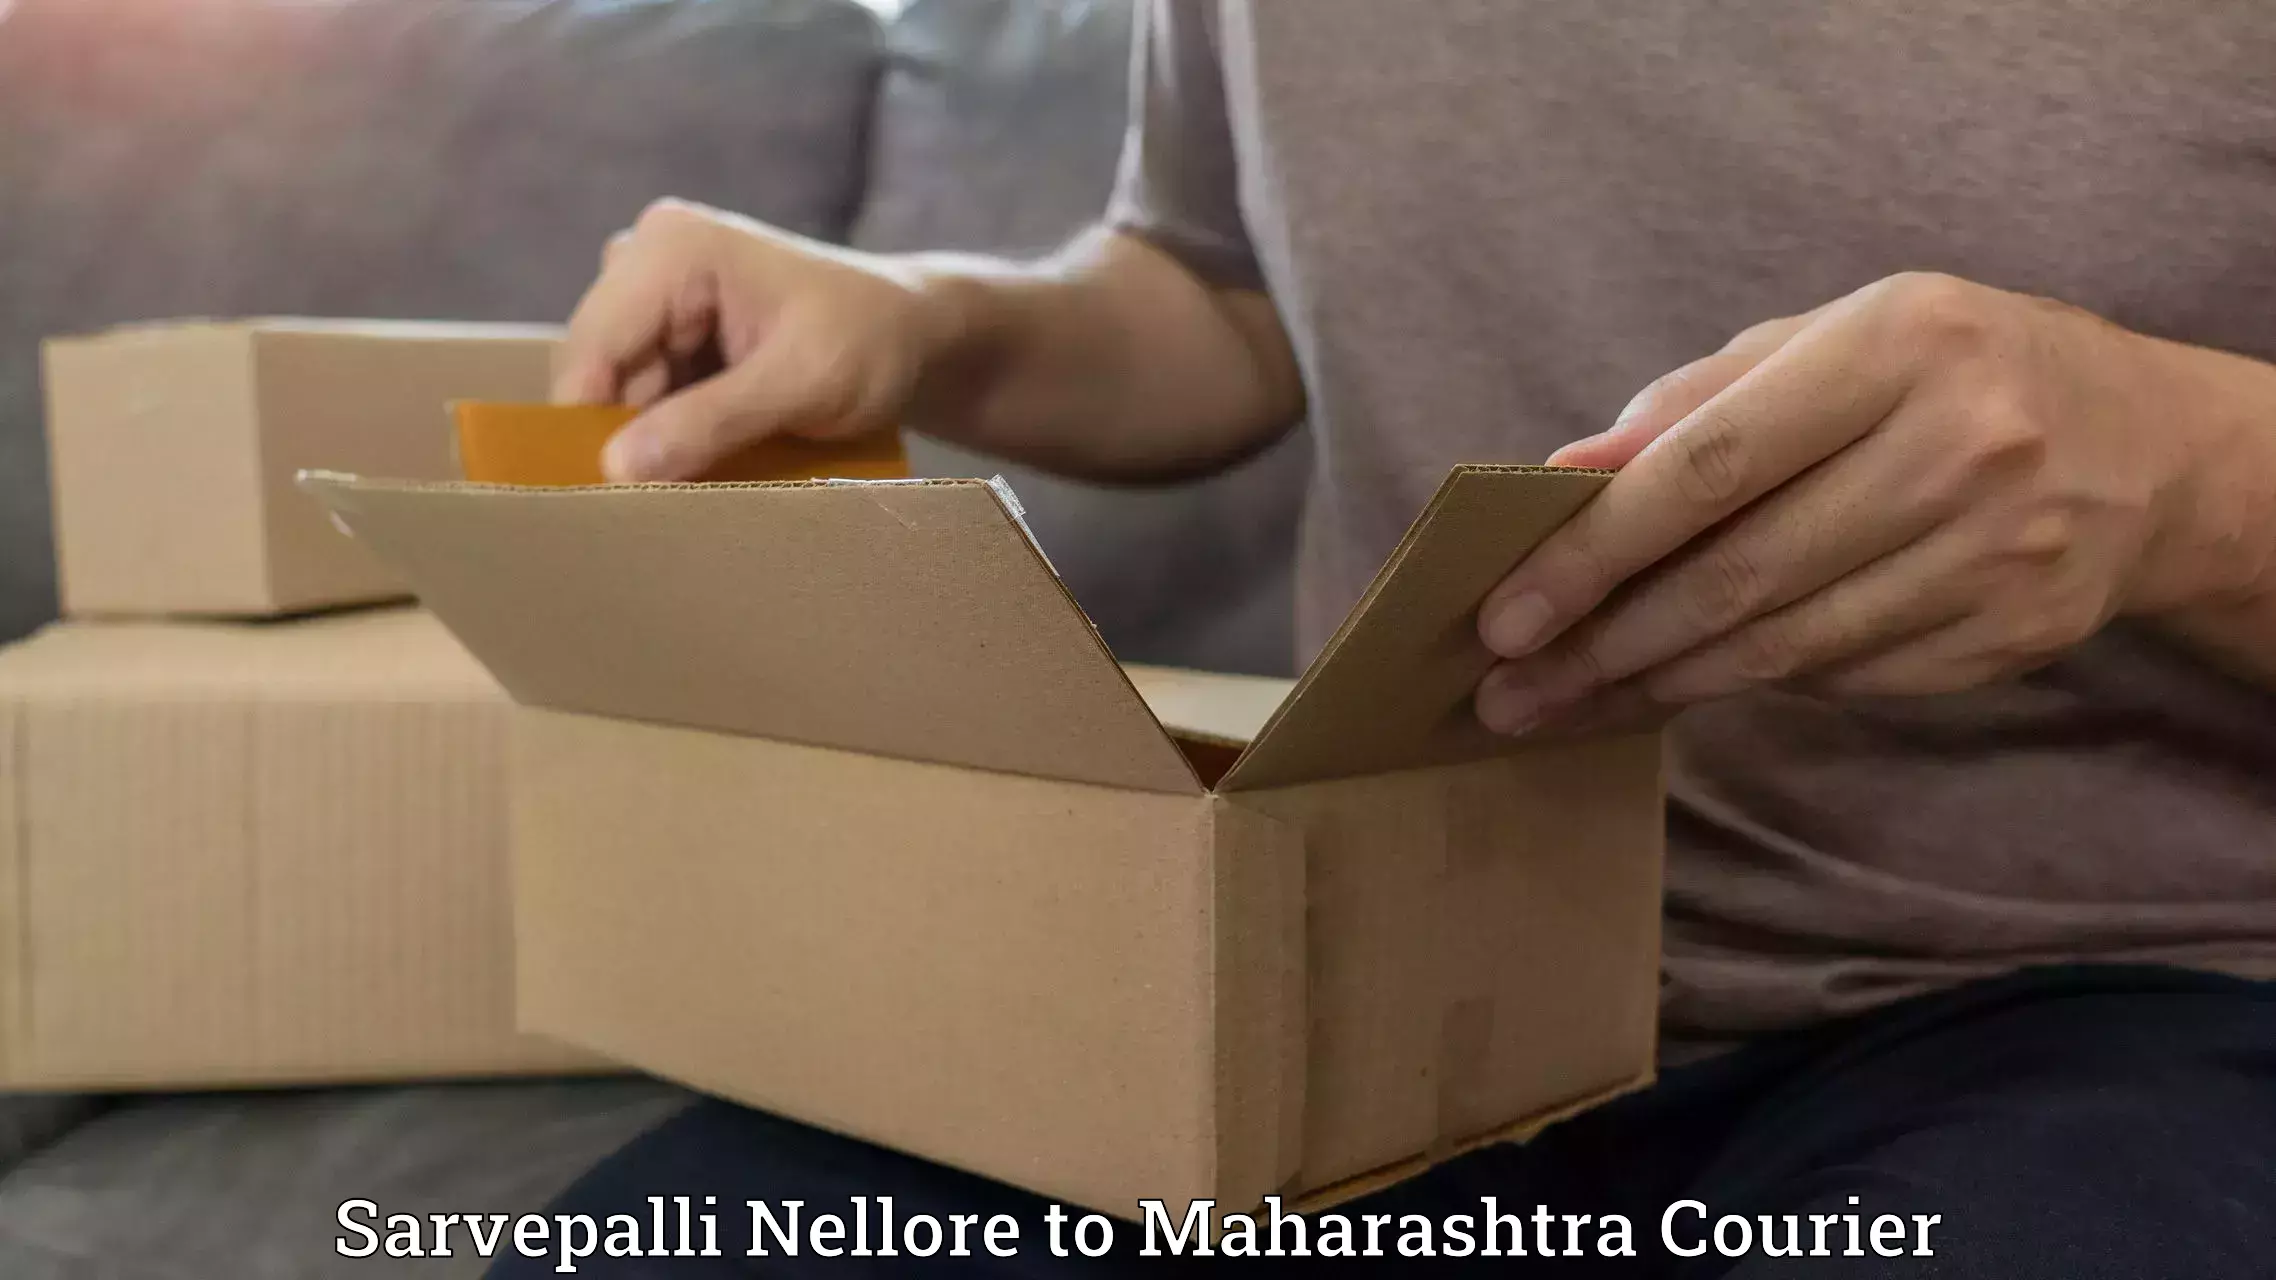 Courier service partnerships Sarvepalli Nellore to Maharashtra